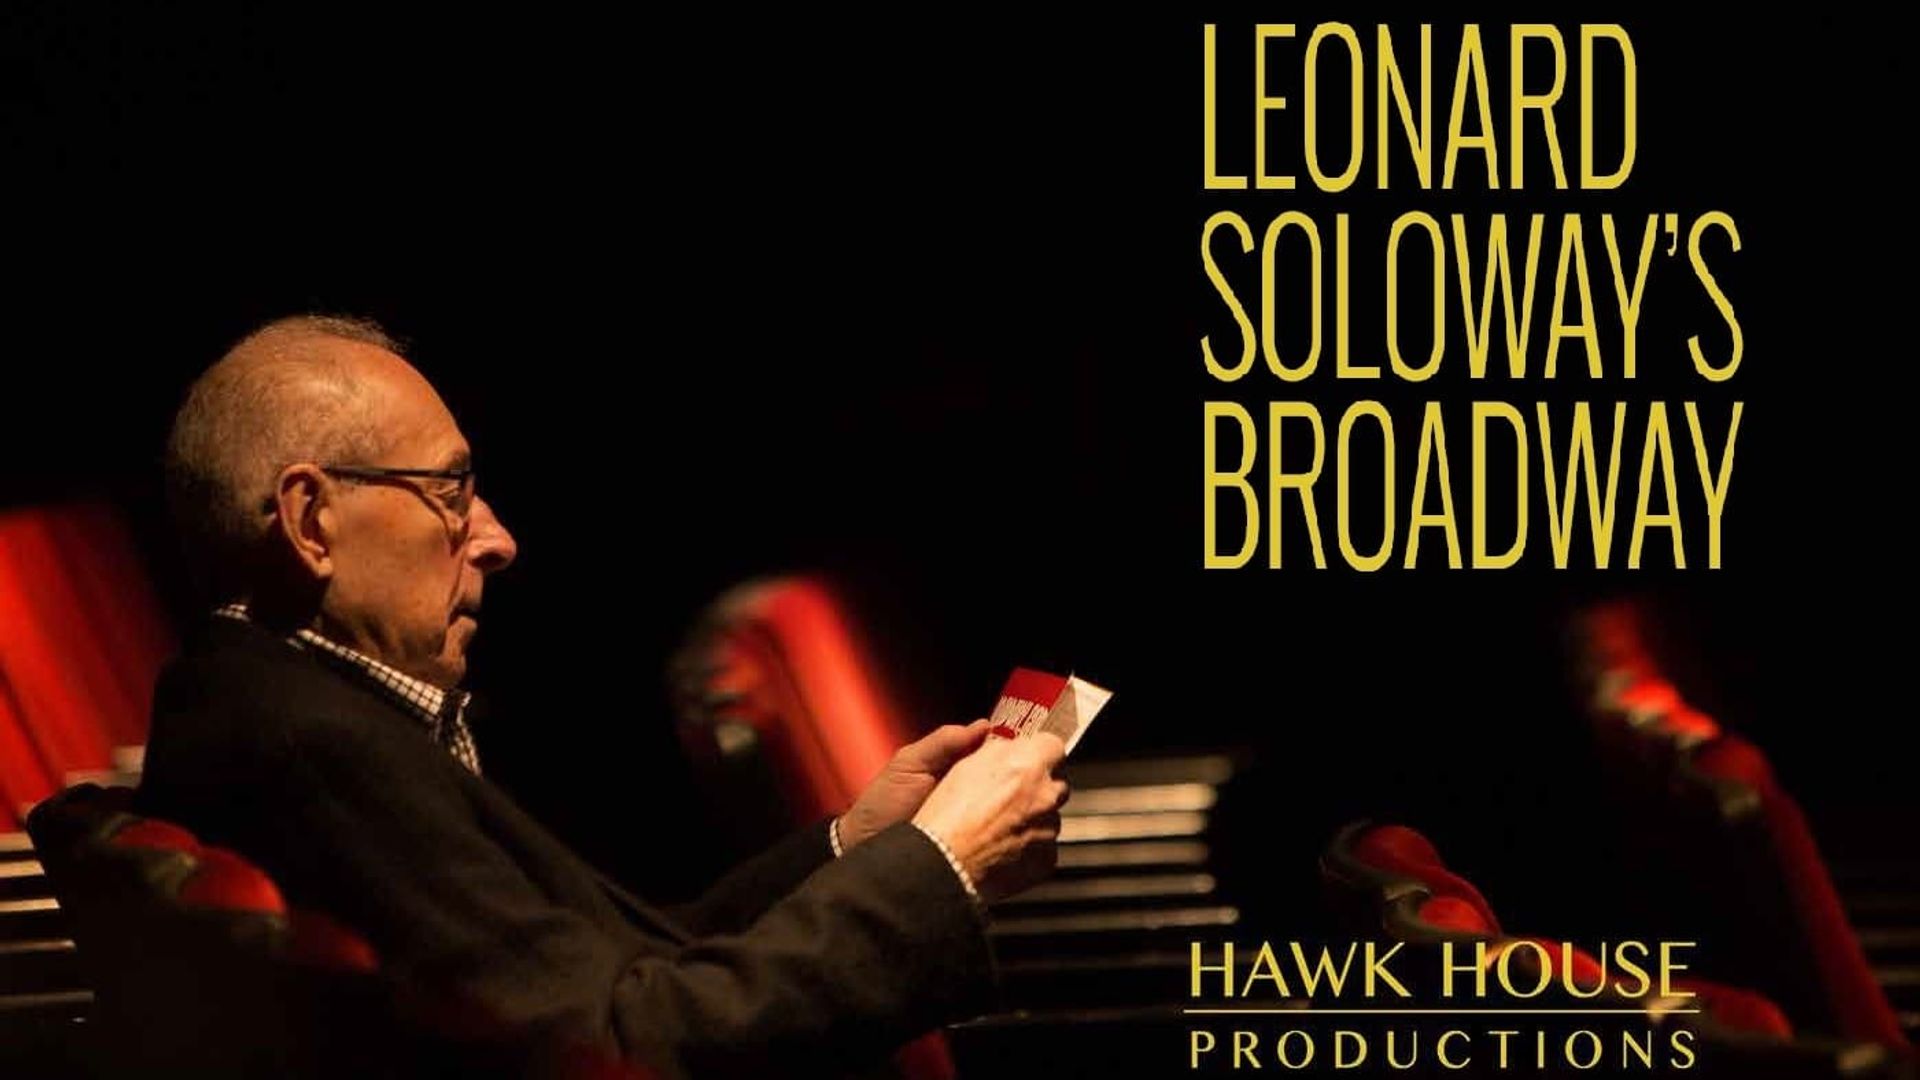 Leonard Soloway's Broadway background